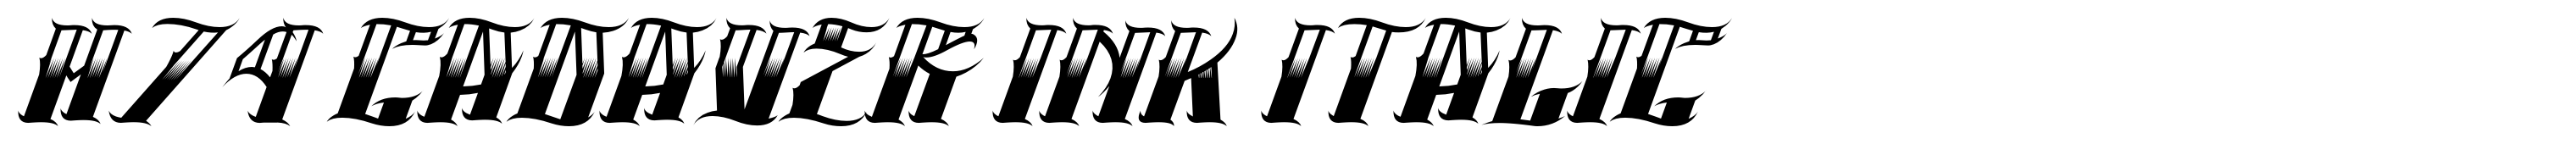 H74 Cadaver Ink Italic